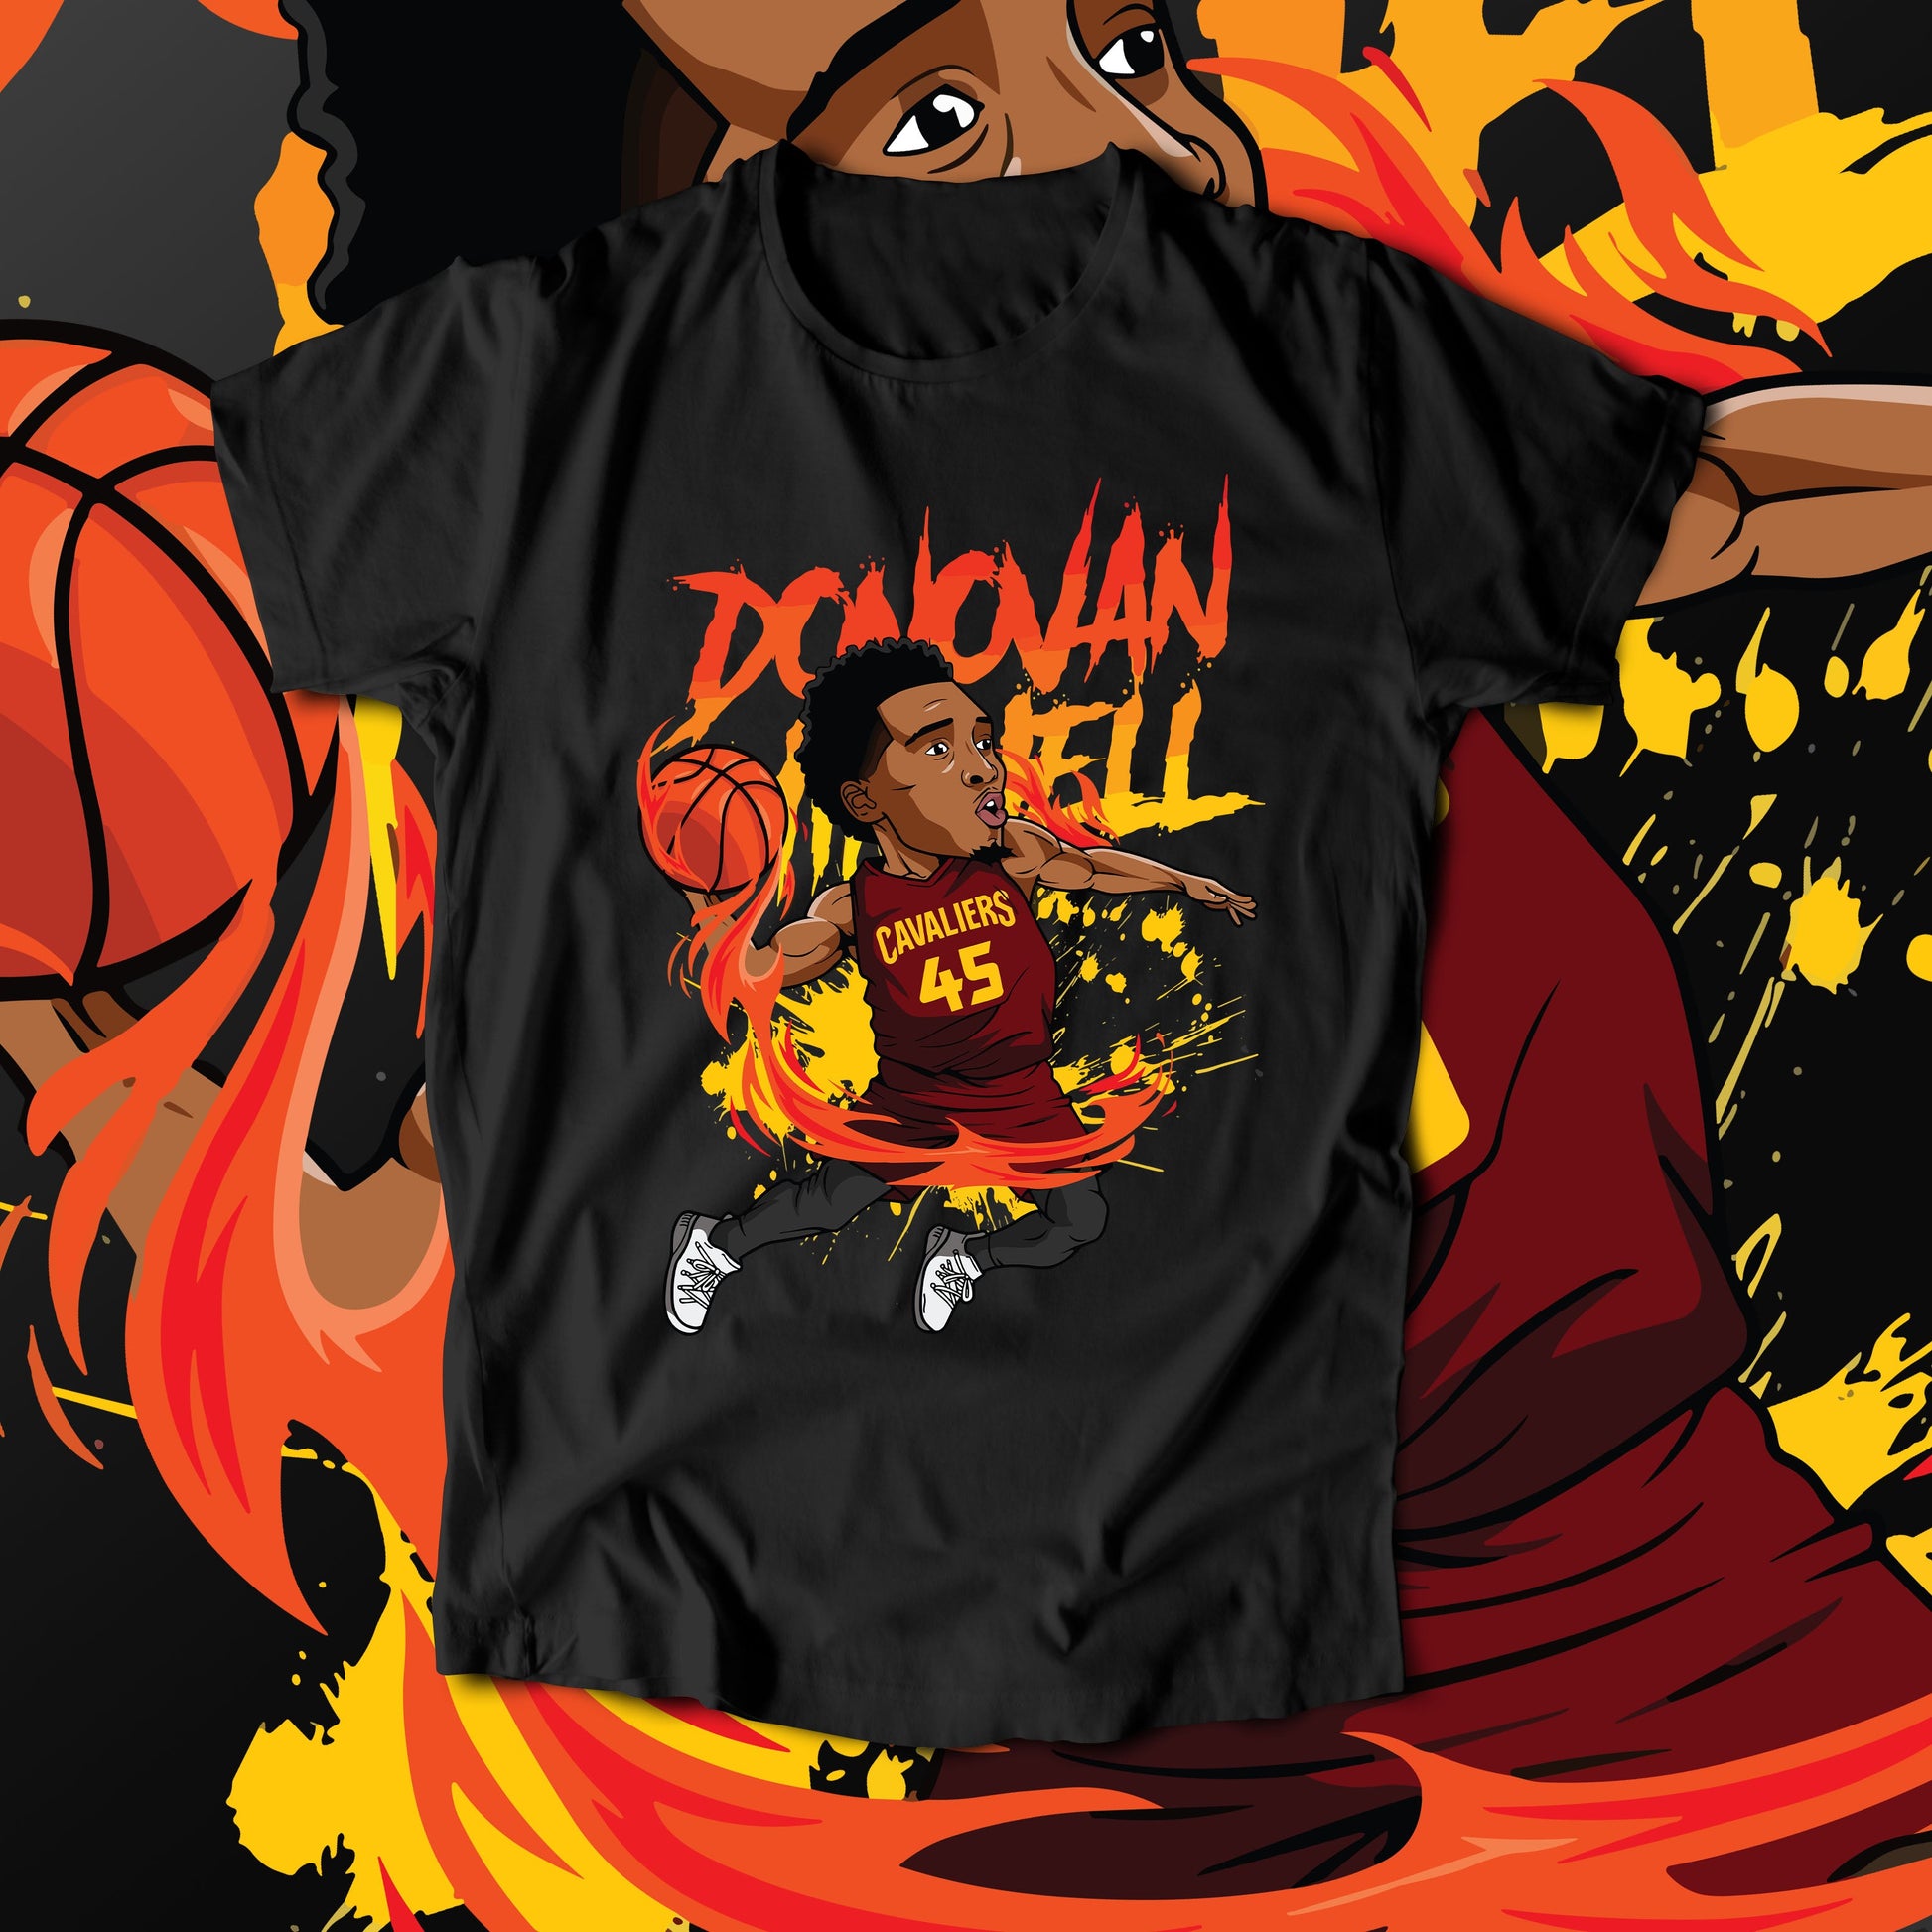 40 Exclusive NBA T-shirt Designs-DaPrintFactory